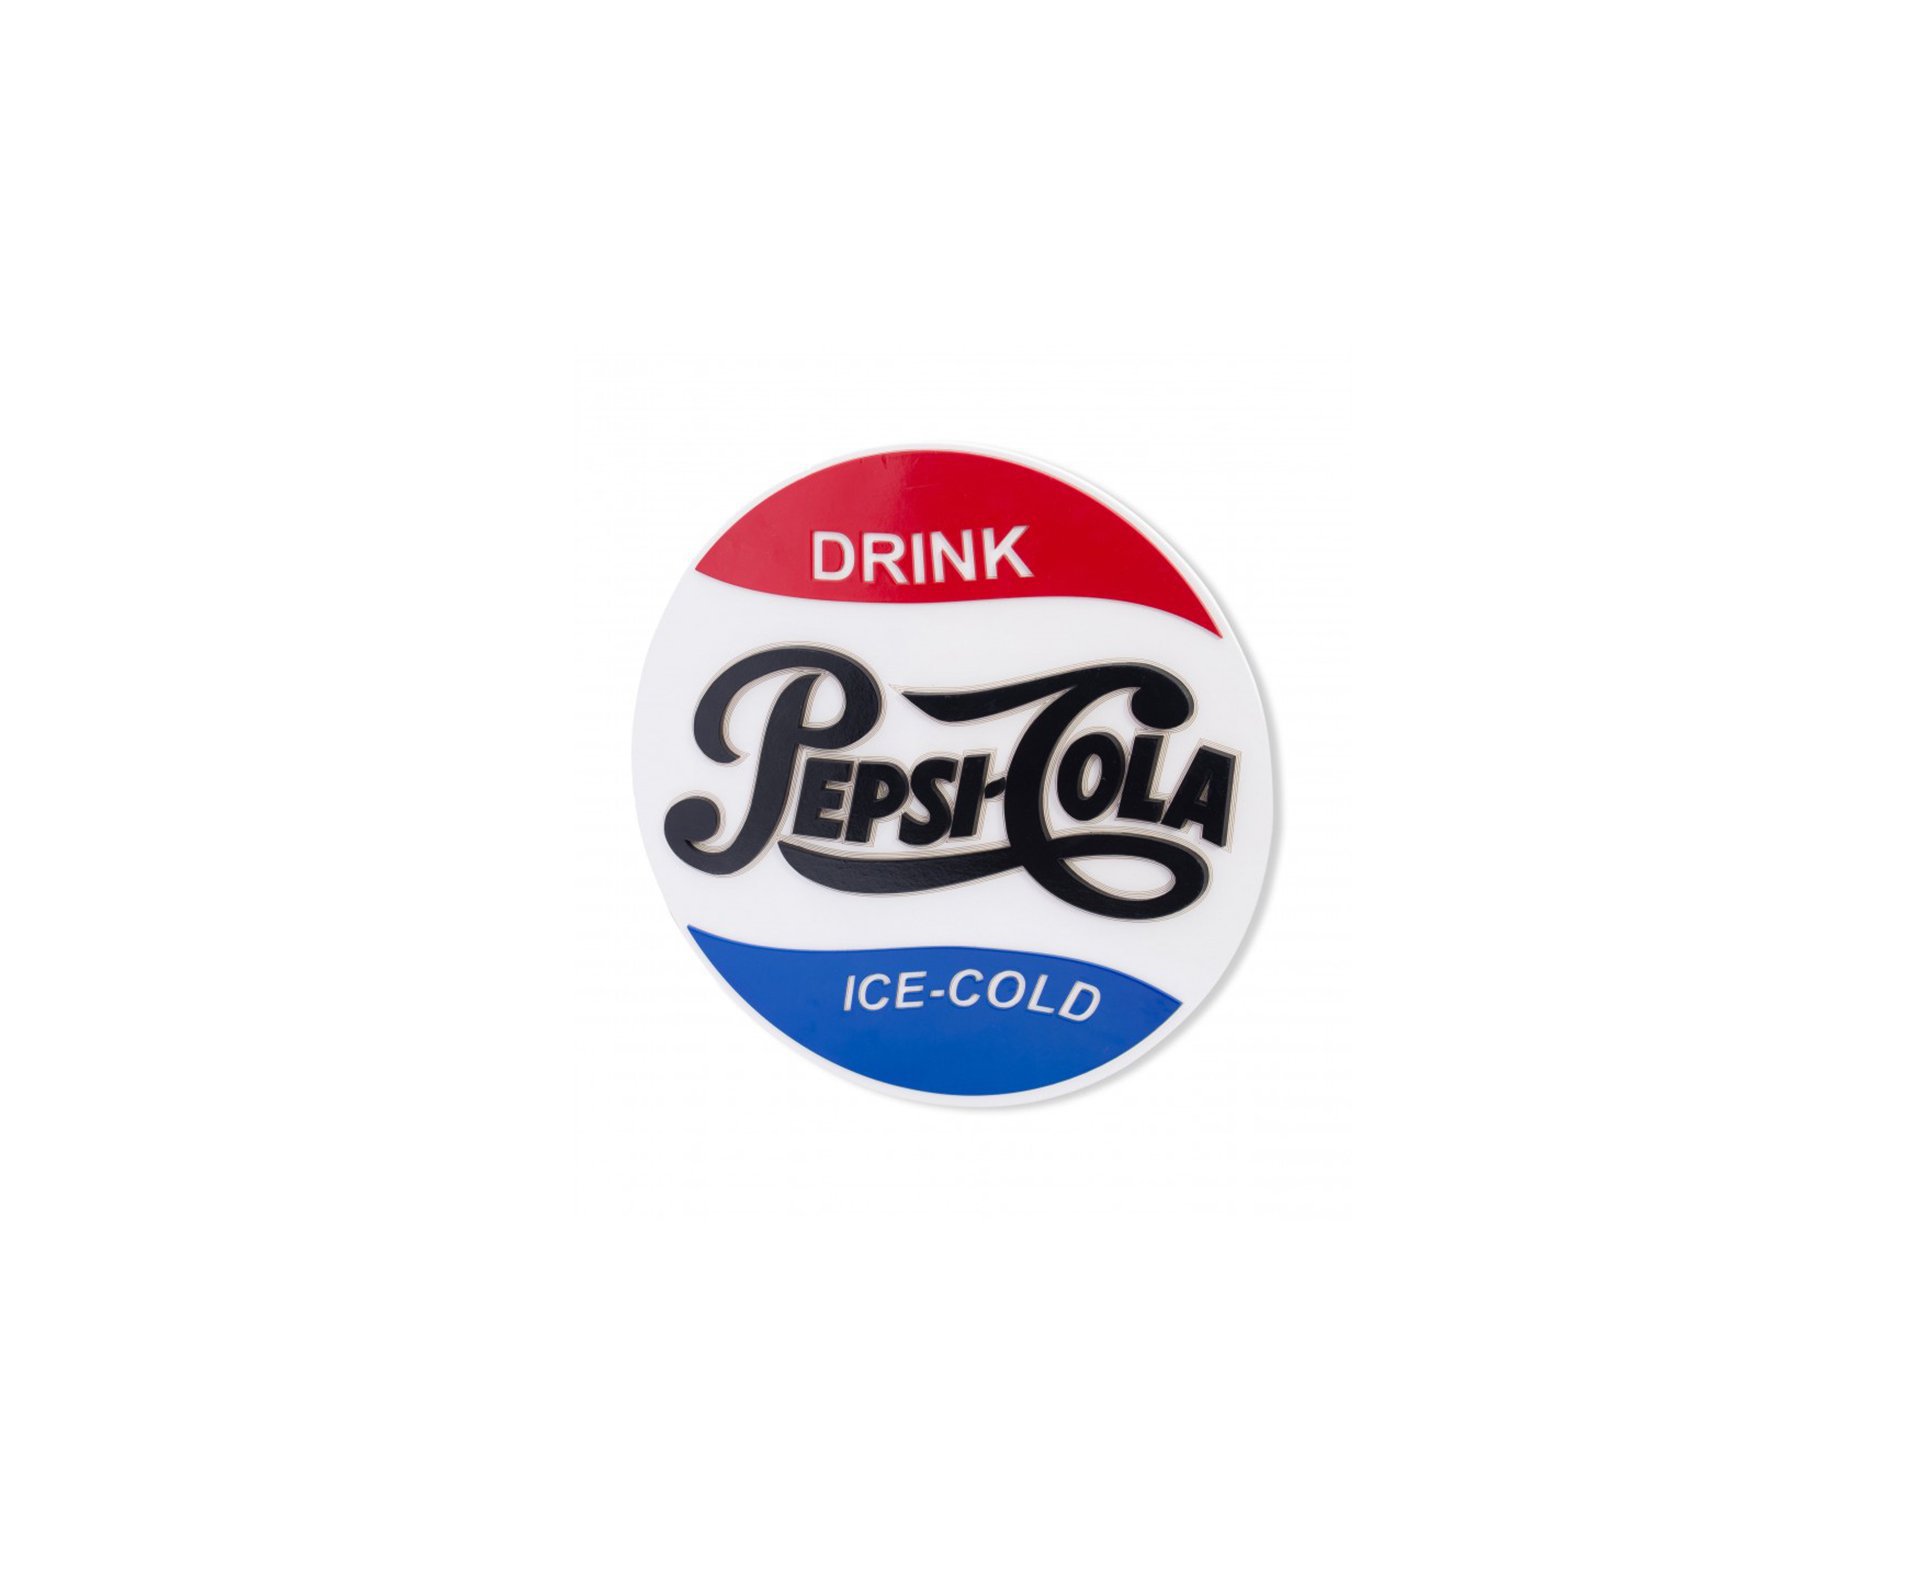 Quadro Bebida - Pepsi Placa - Geton